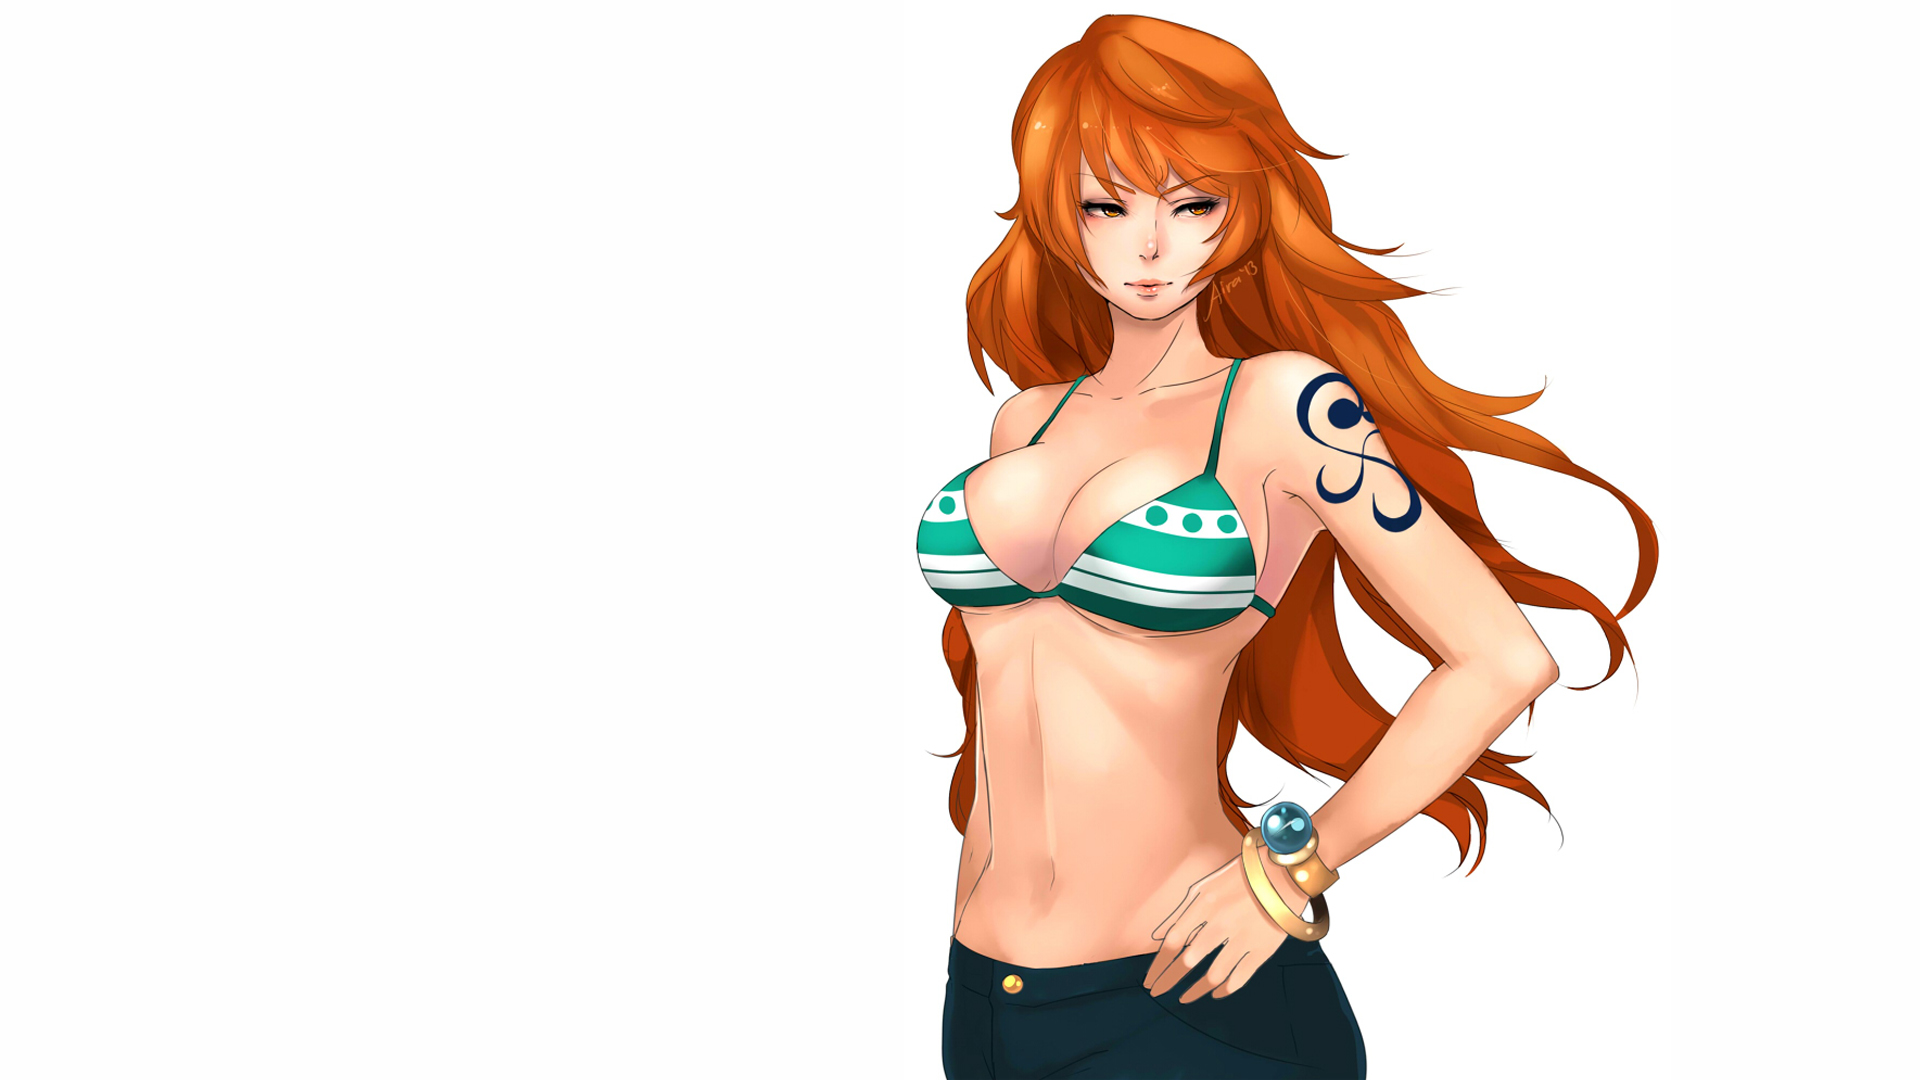 redhead, big boobs, fictional character, Nami, One Piece, boobs, tattoo,  bikini top, anime girls, artwork | 1920x1080 Wallpaper - wallhaven.cc